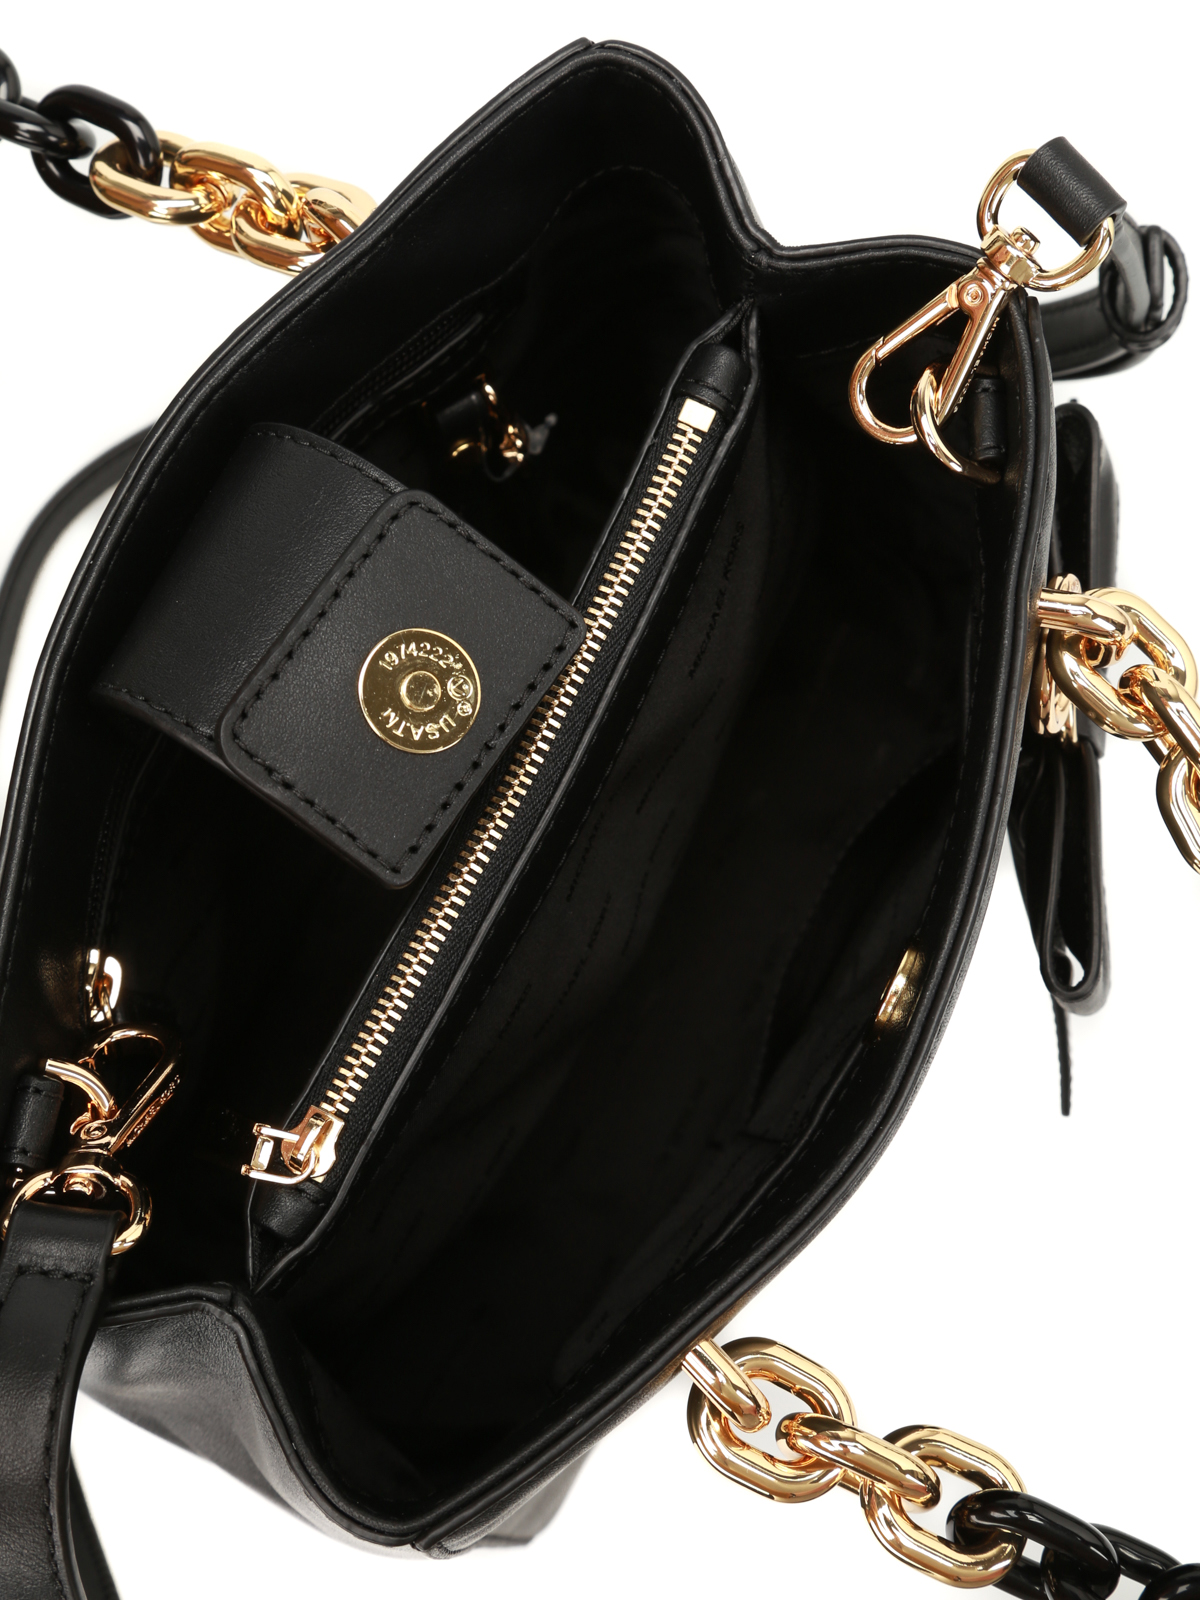 Cynthia bow detail leather handbag 